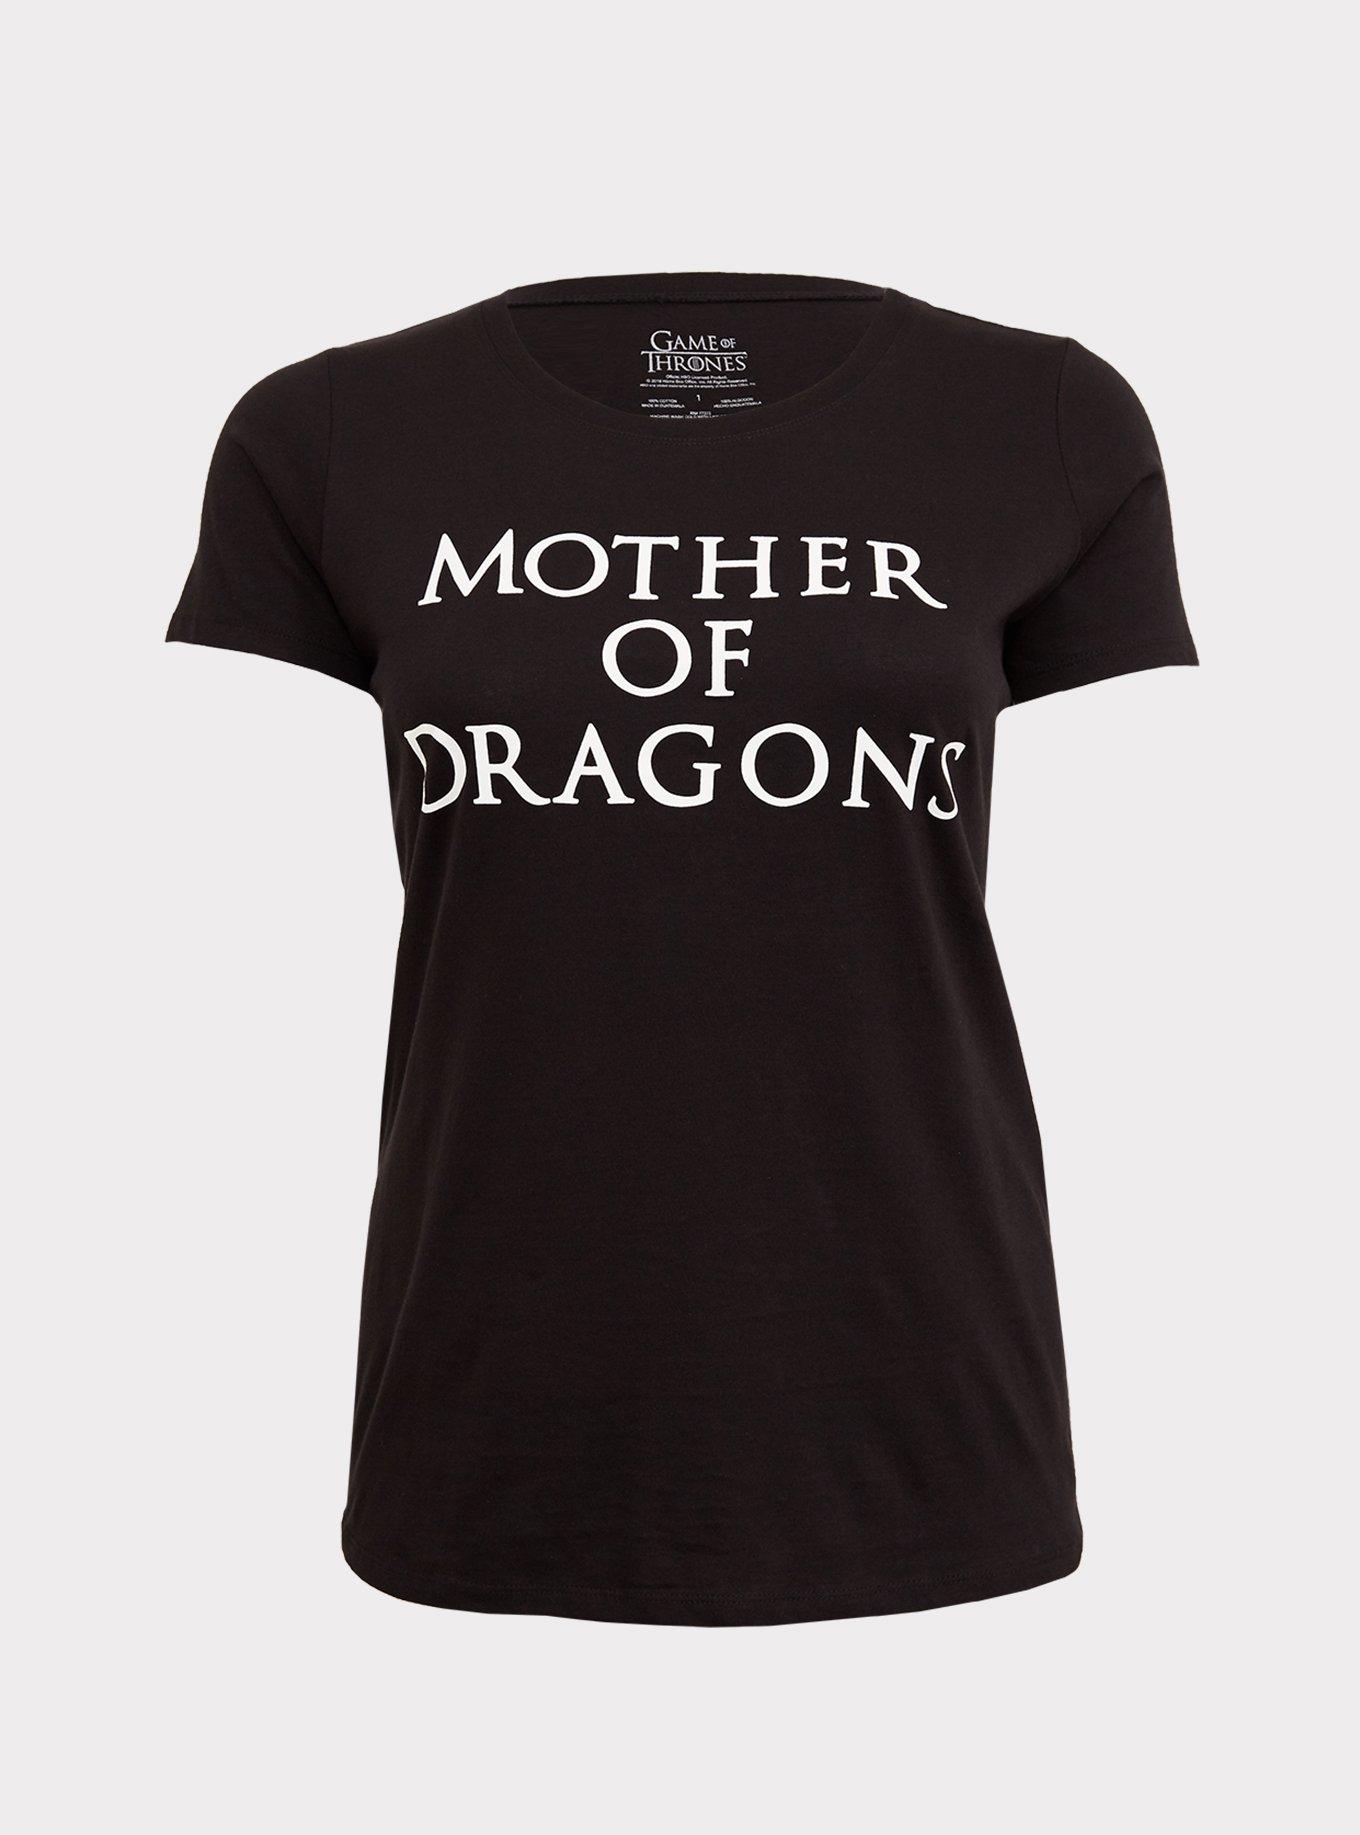 Plus Size - Game of Thrones Mother of Dragons Black Slim Fit Tee - Torrid